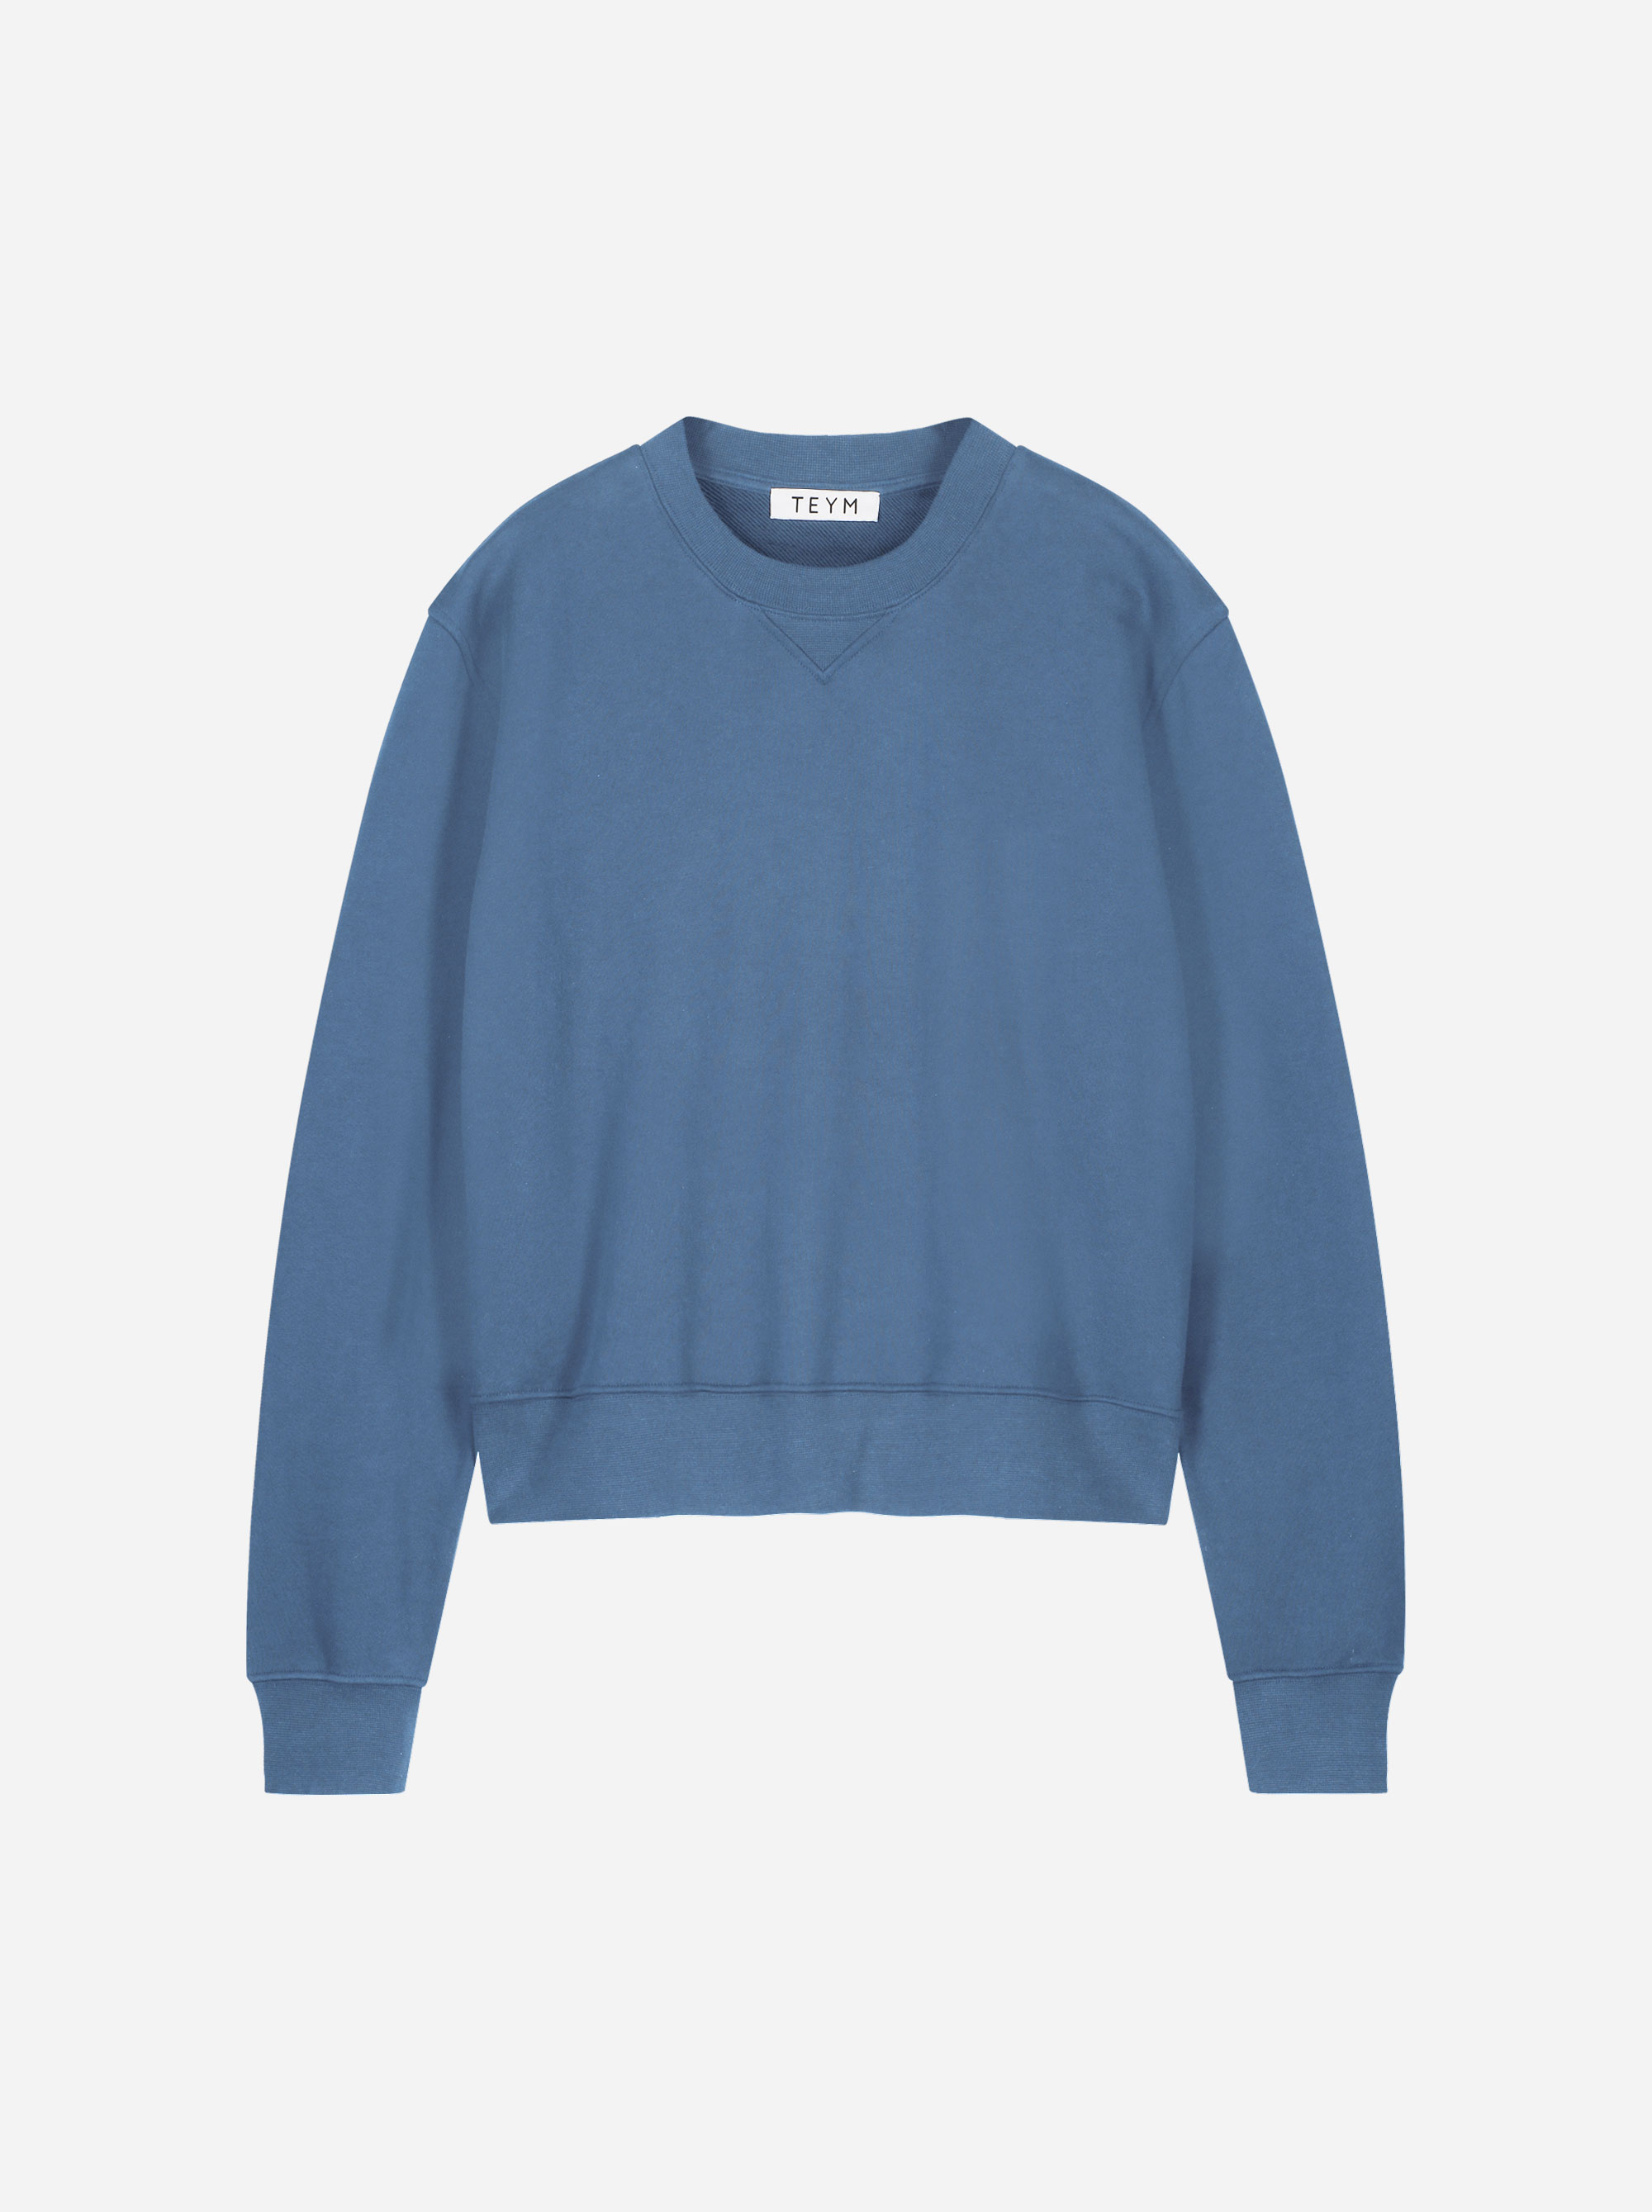 Teym - The Sweatshirt - Blue Grey - Women - 4